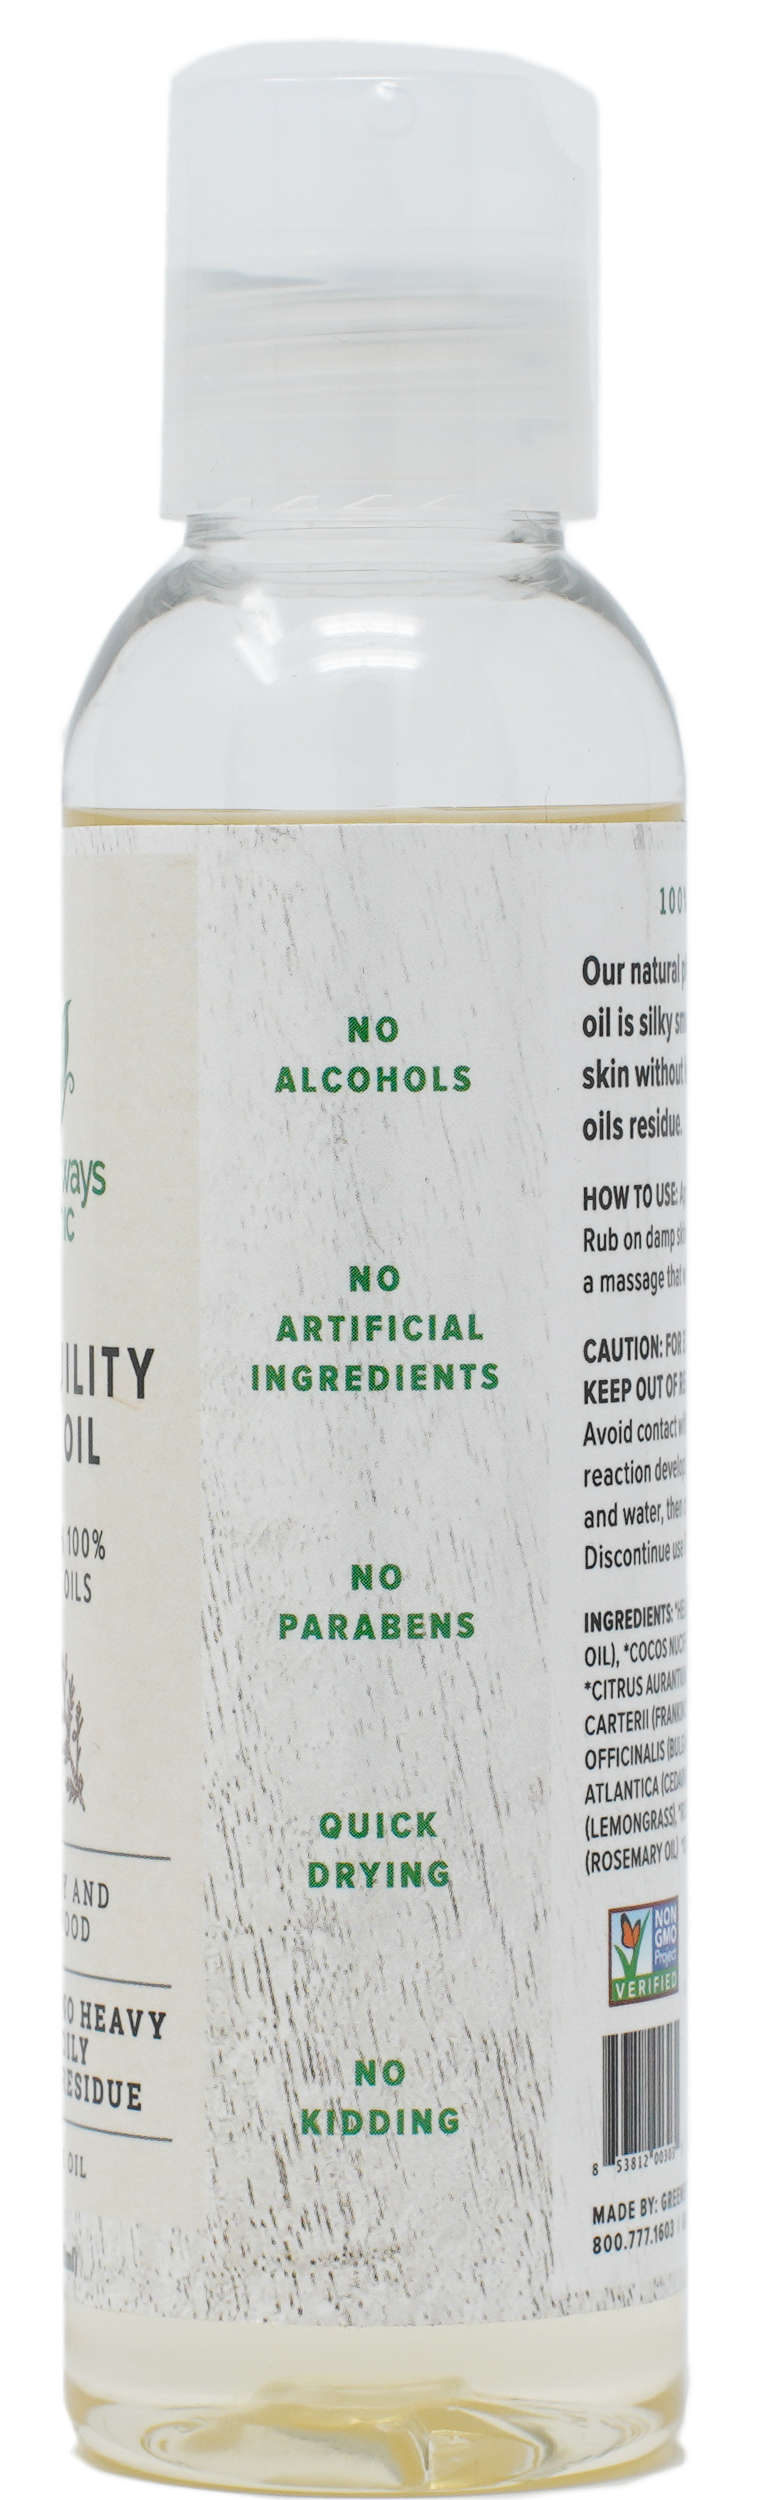 Greenerways Organic Tranquility Body Oil (4oz)